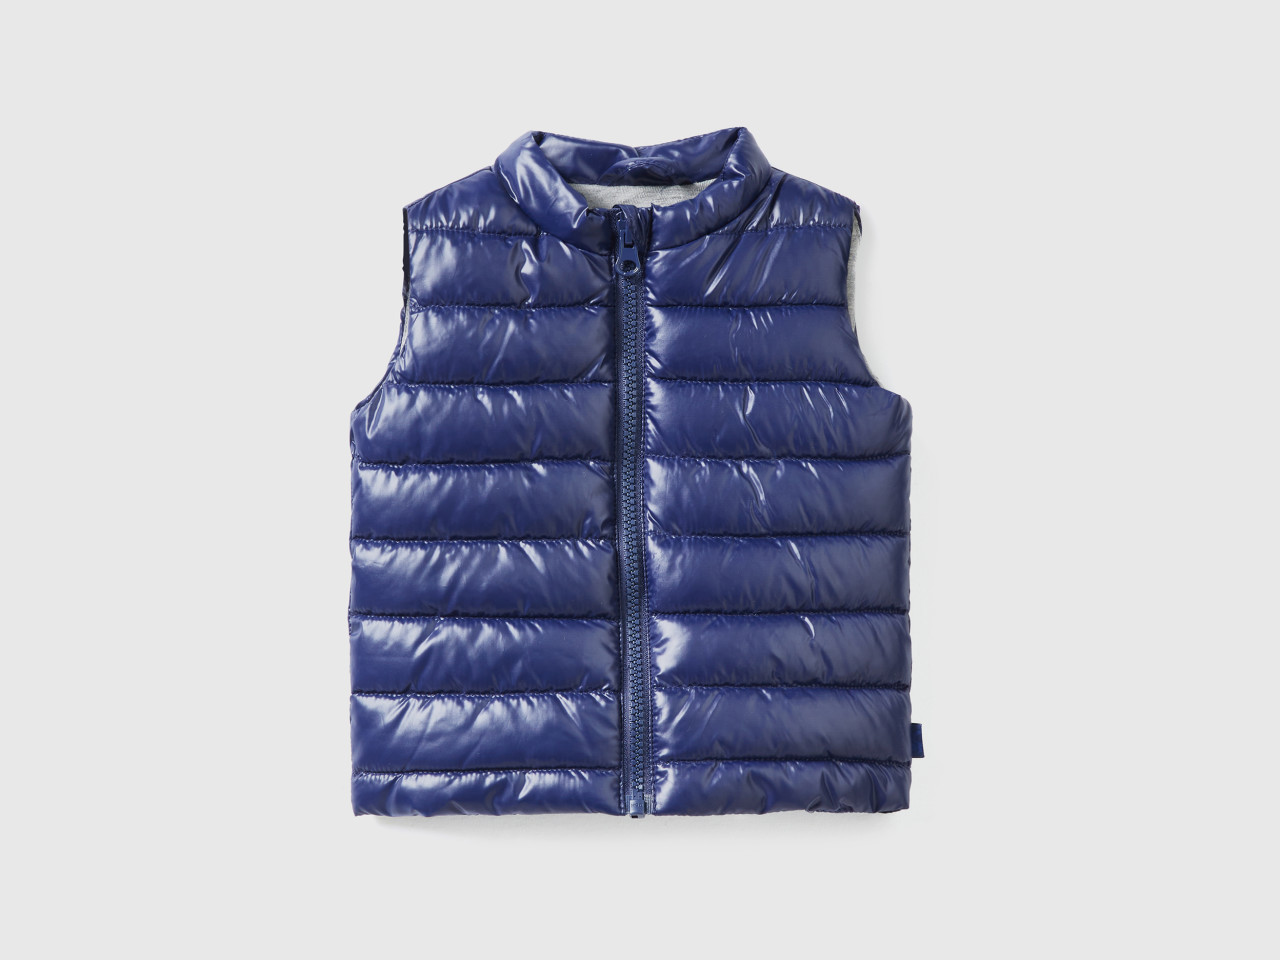 Anorak - Coats & jackets - Clothing - Man - PULL&BEAR Nicaragua